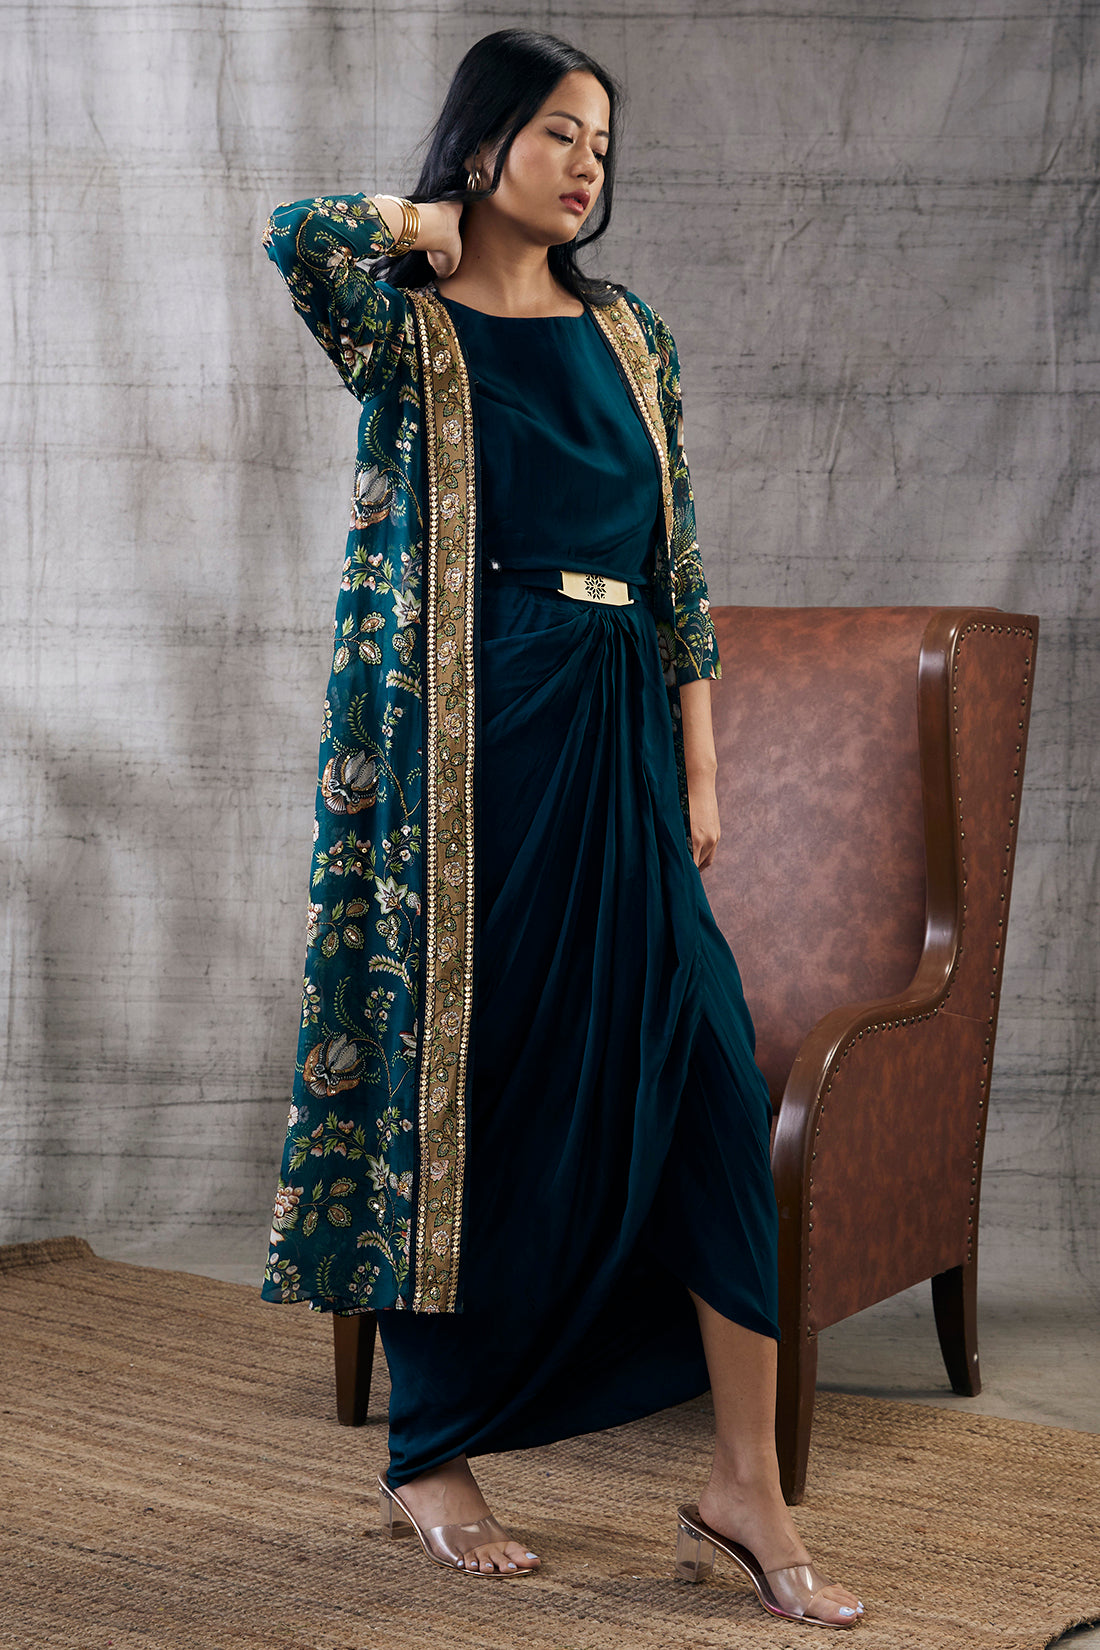 Mehra drape dress with printed jacket